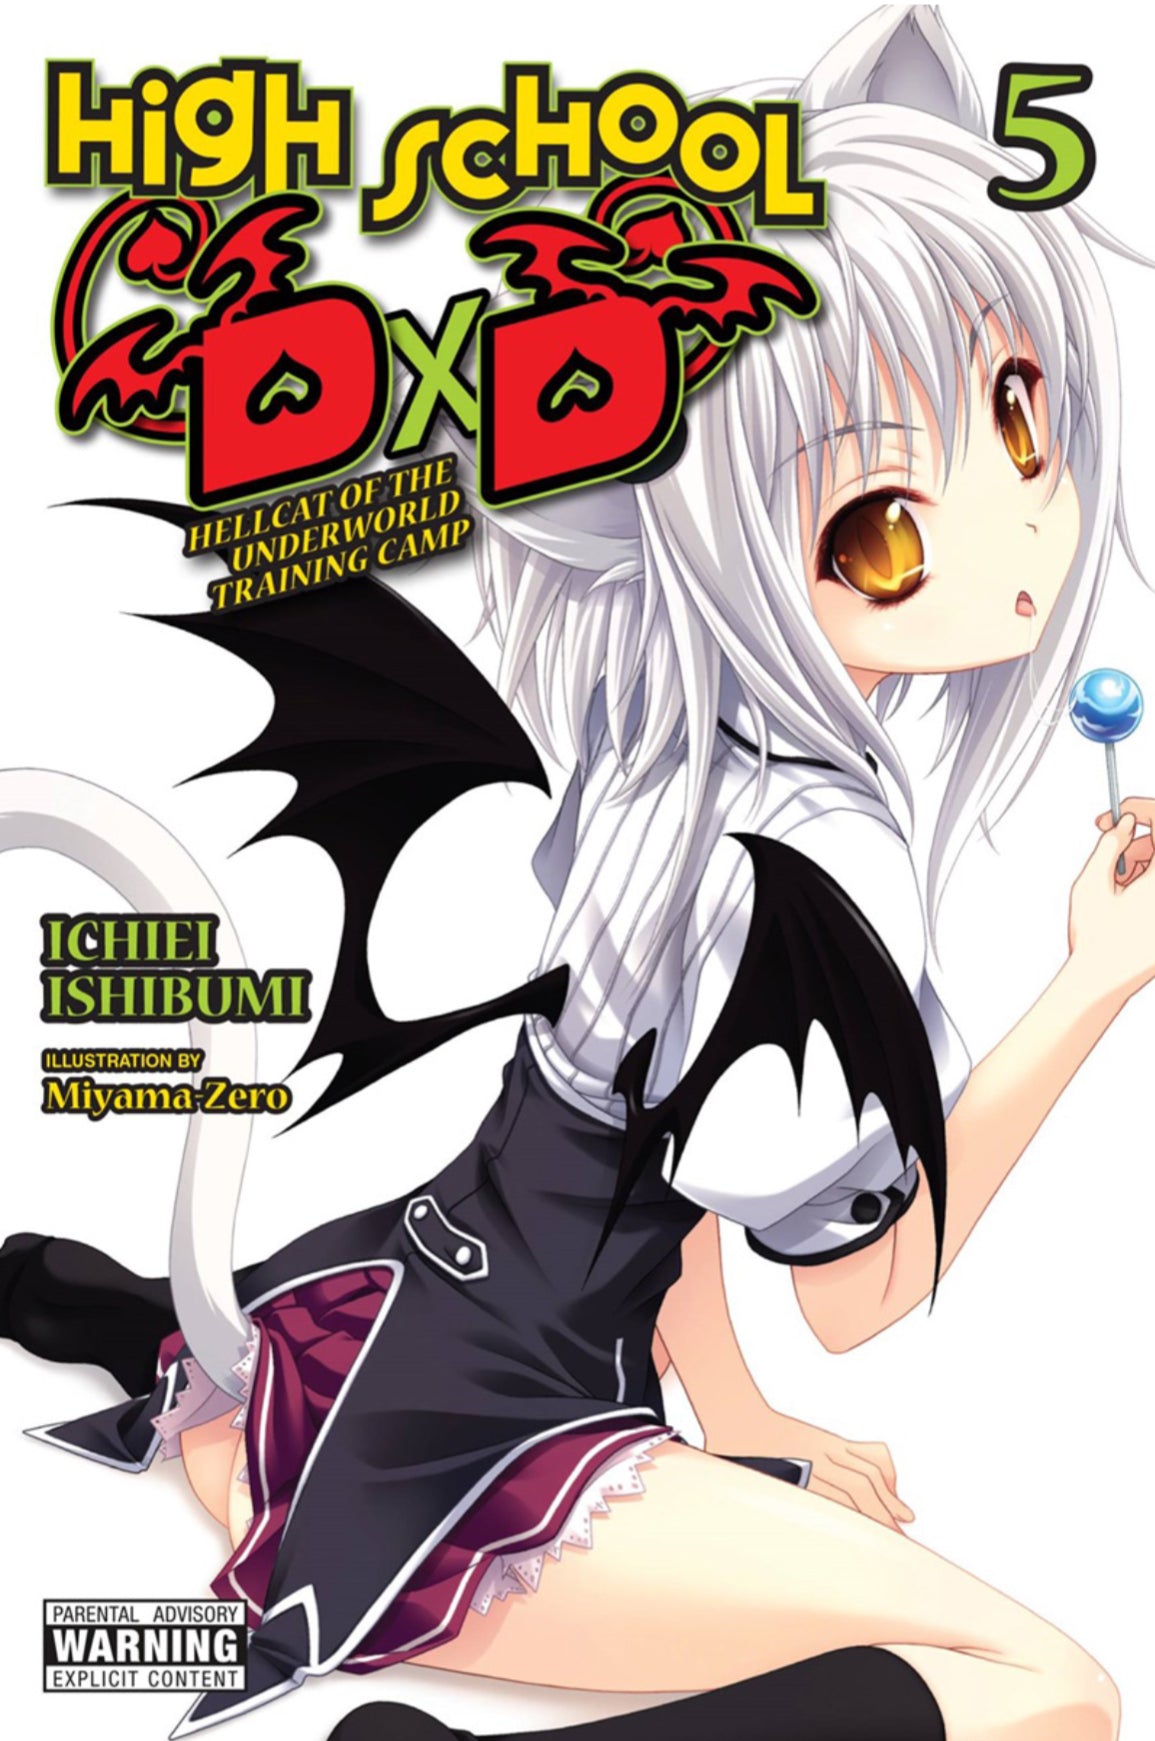 High School DxD Novel Volume 5 Hellcat of the Underworld Training Camp Manga